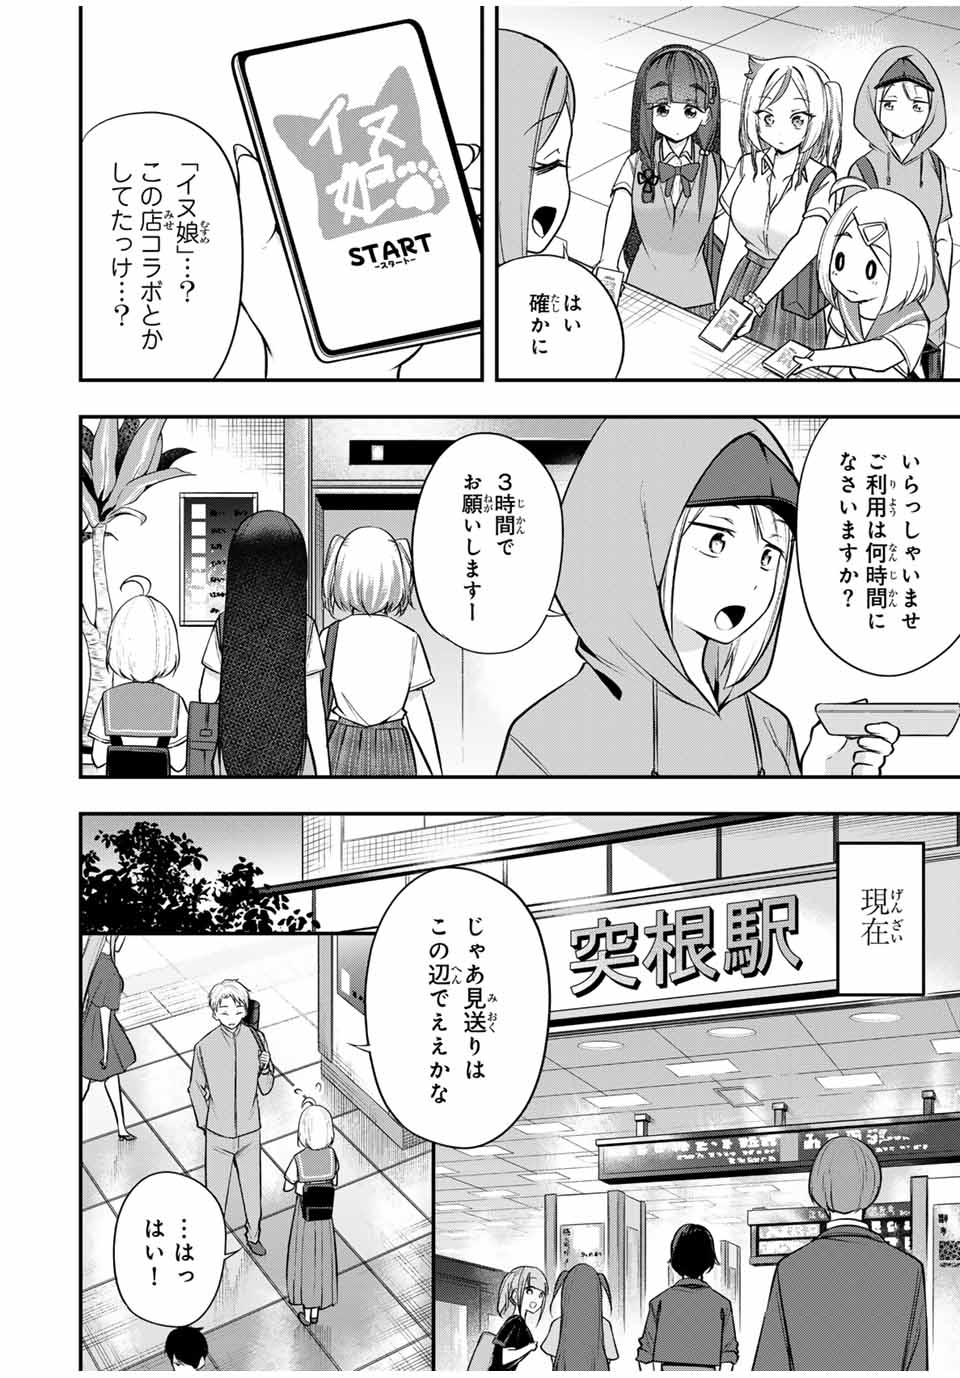 Heroine wa xx Okasegitai - Chapter 13 - Page 6